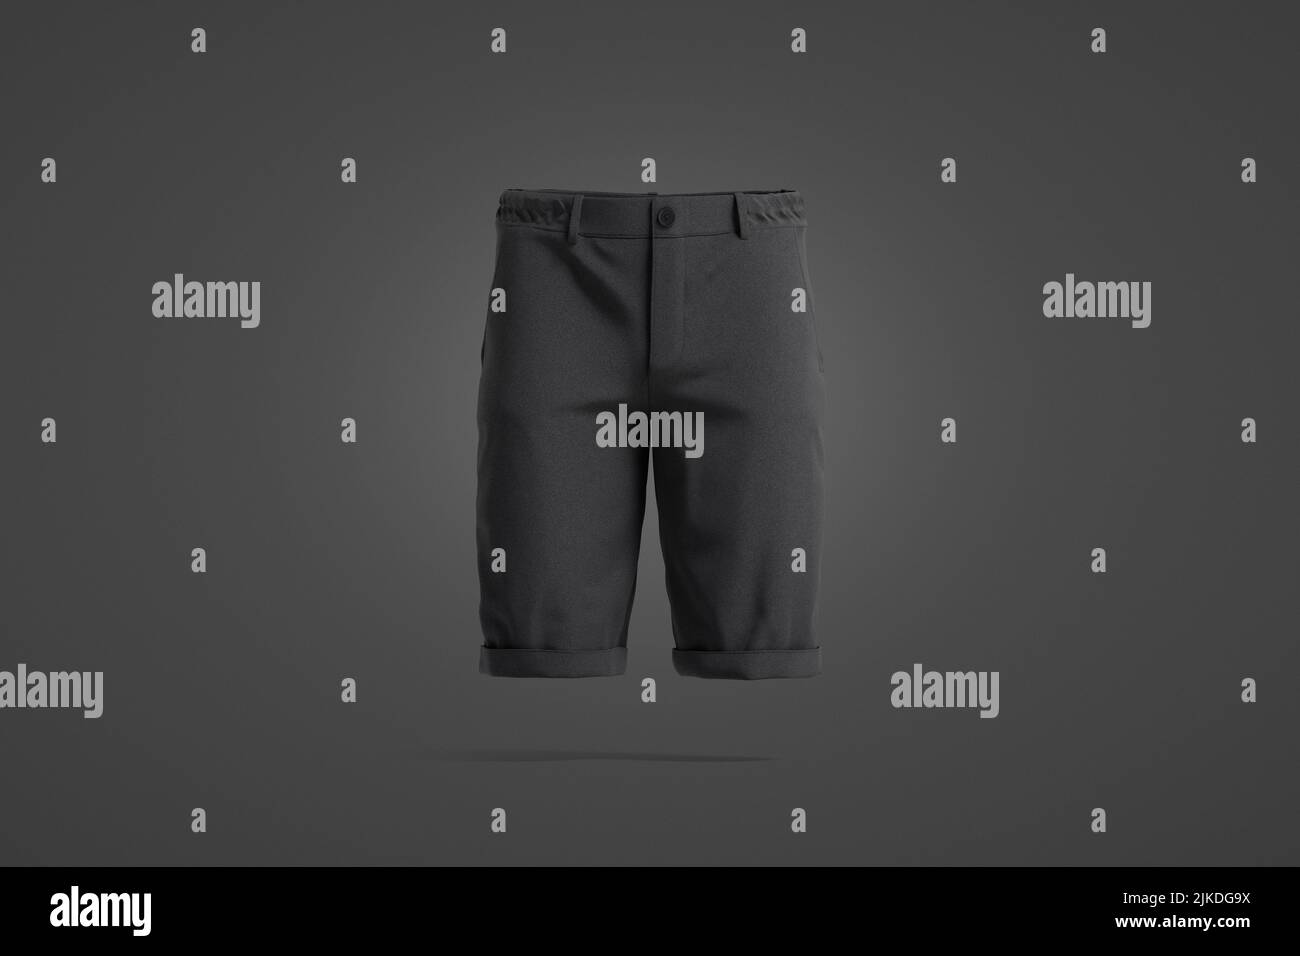 Blank black men shorts mockup, dark background Stock Photo